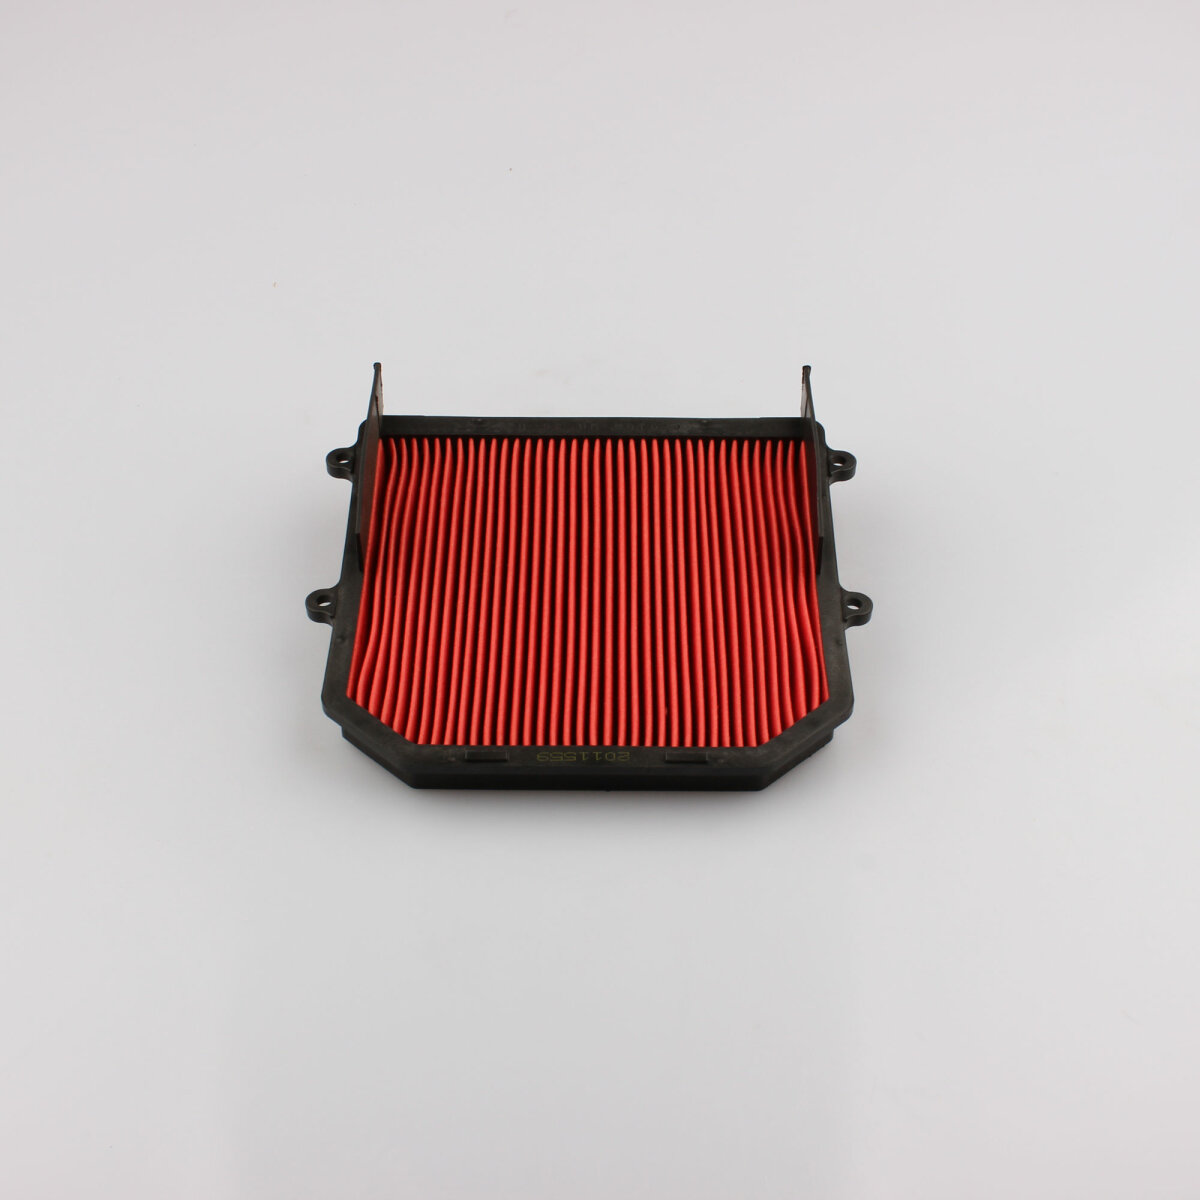 Air filter for Honda XL 1000 Varadero 03-13 17210-MBT-D20, 25,20 €